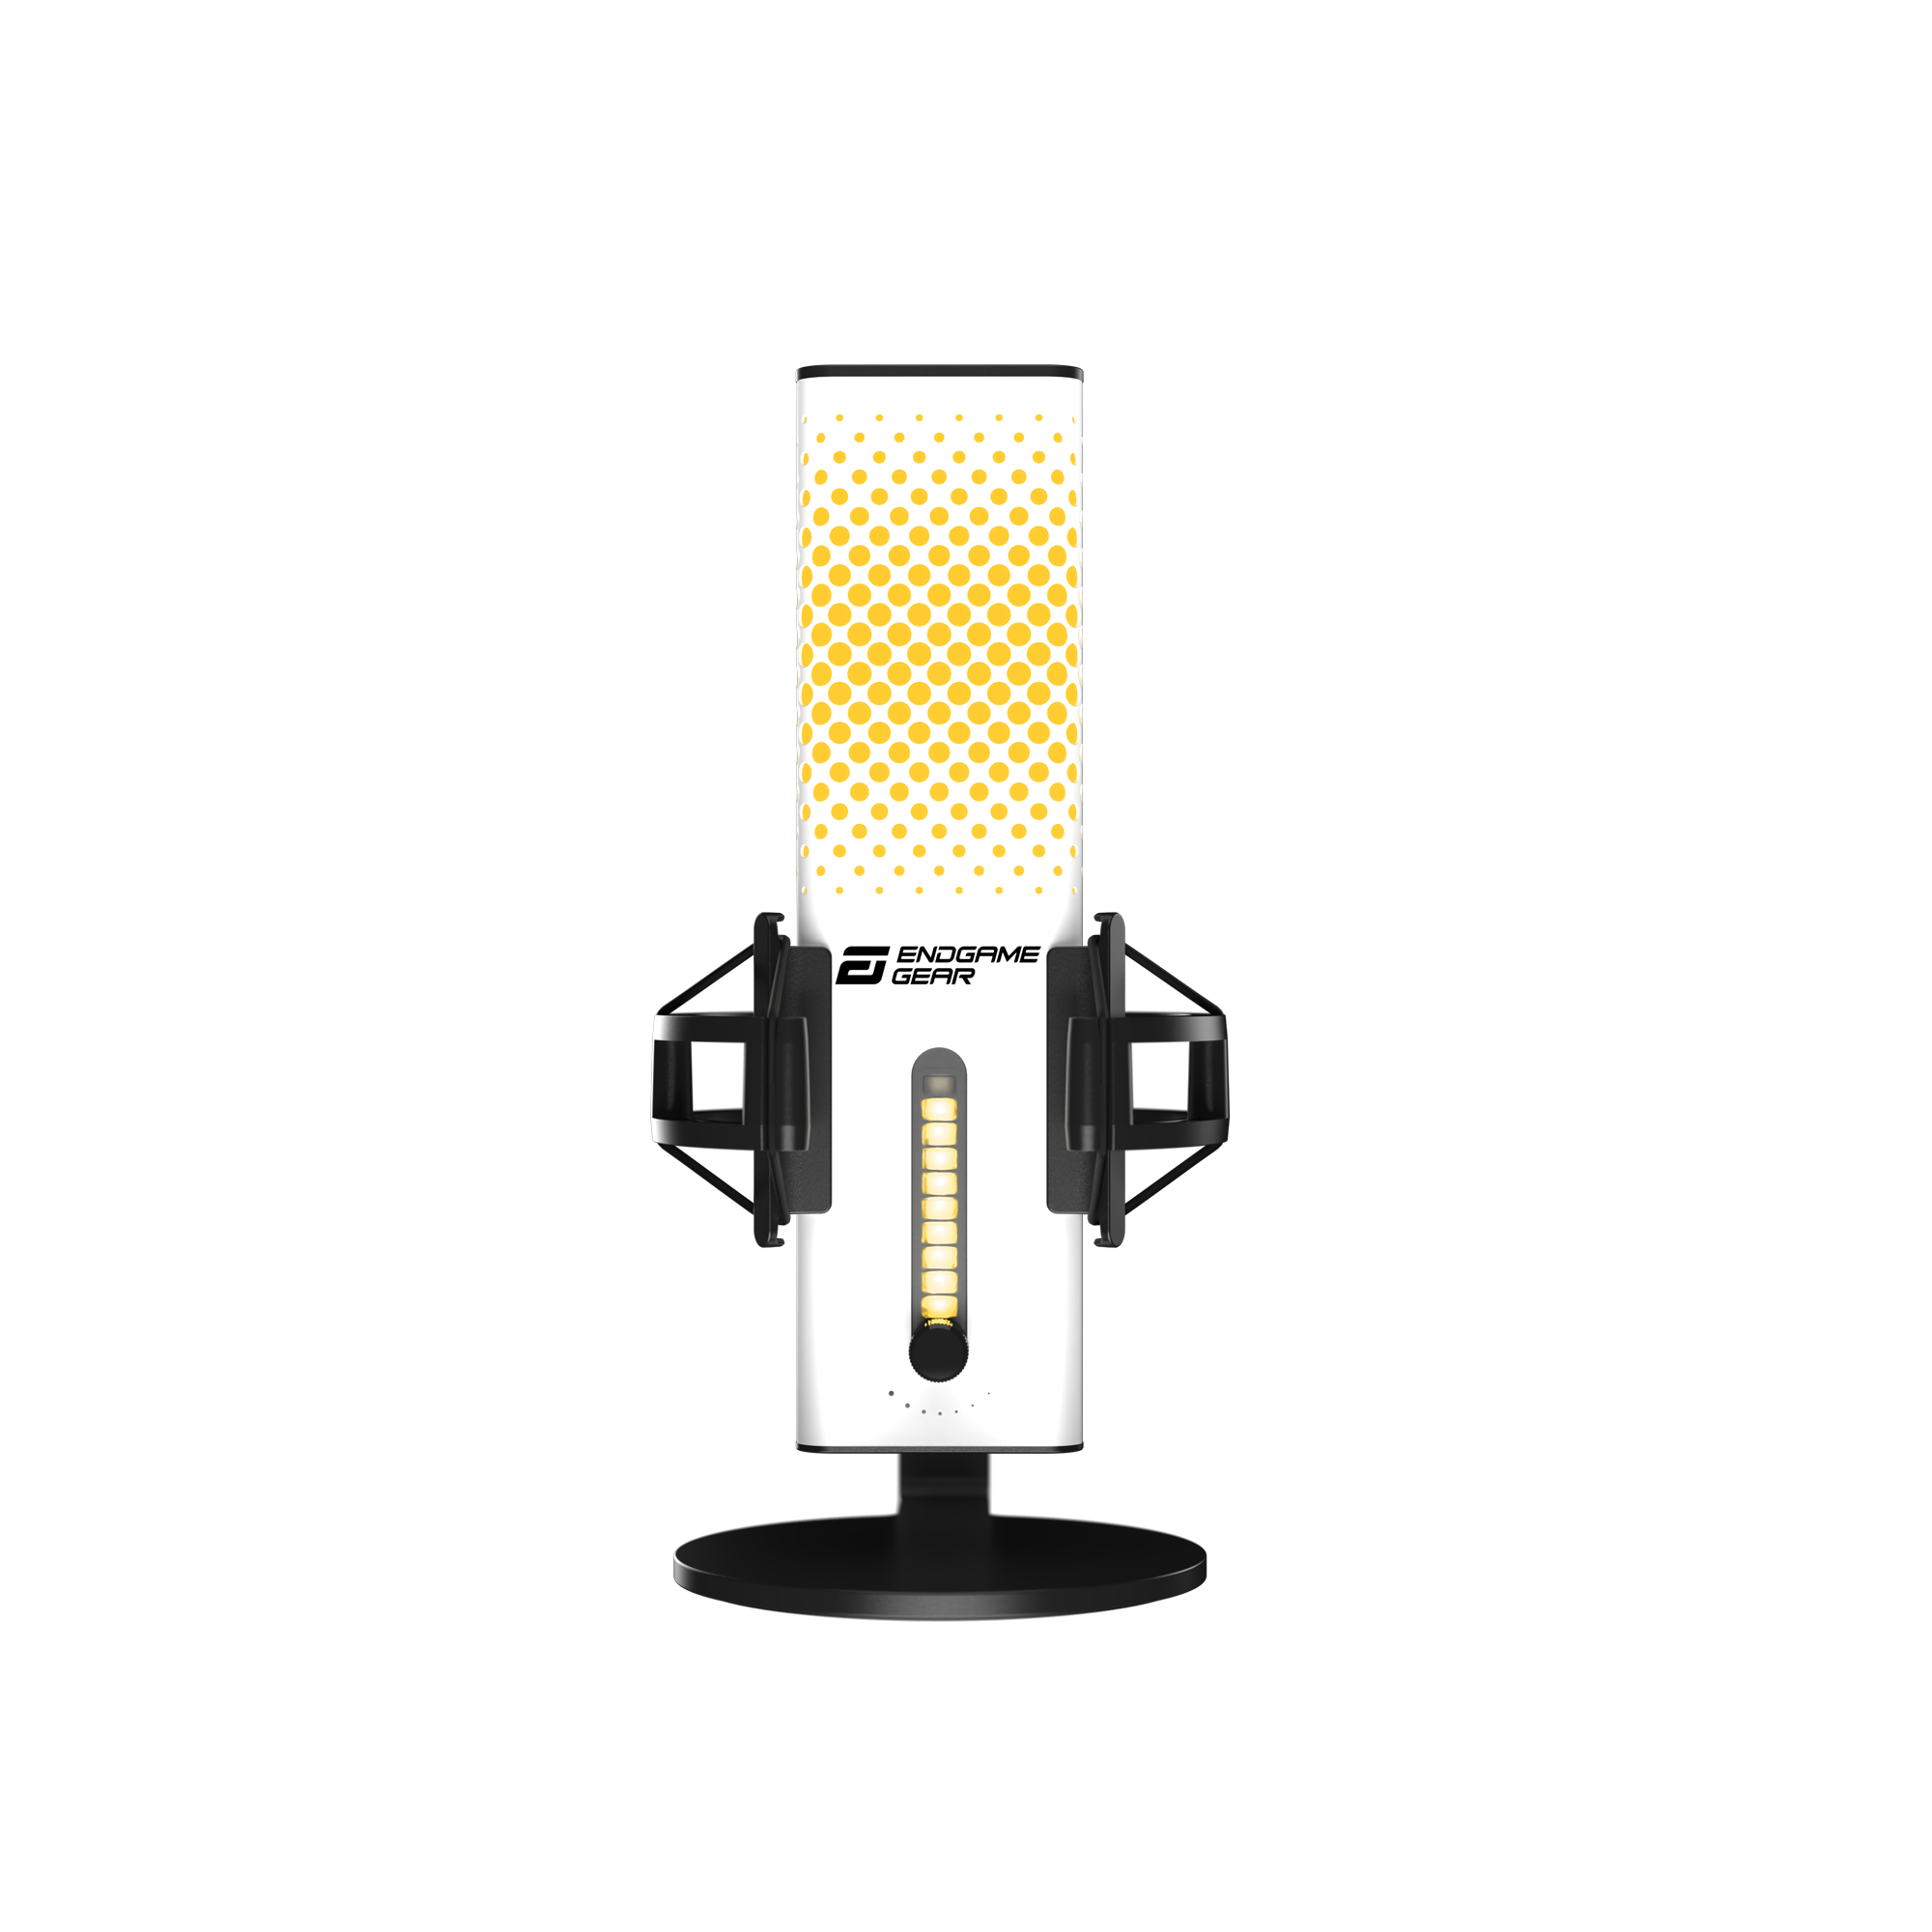 endgame-gear - XSTRM USB Microphone White